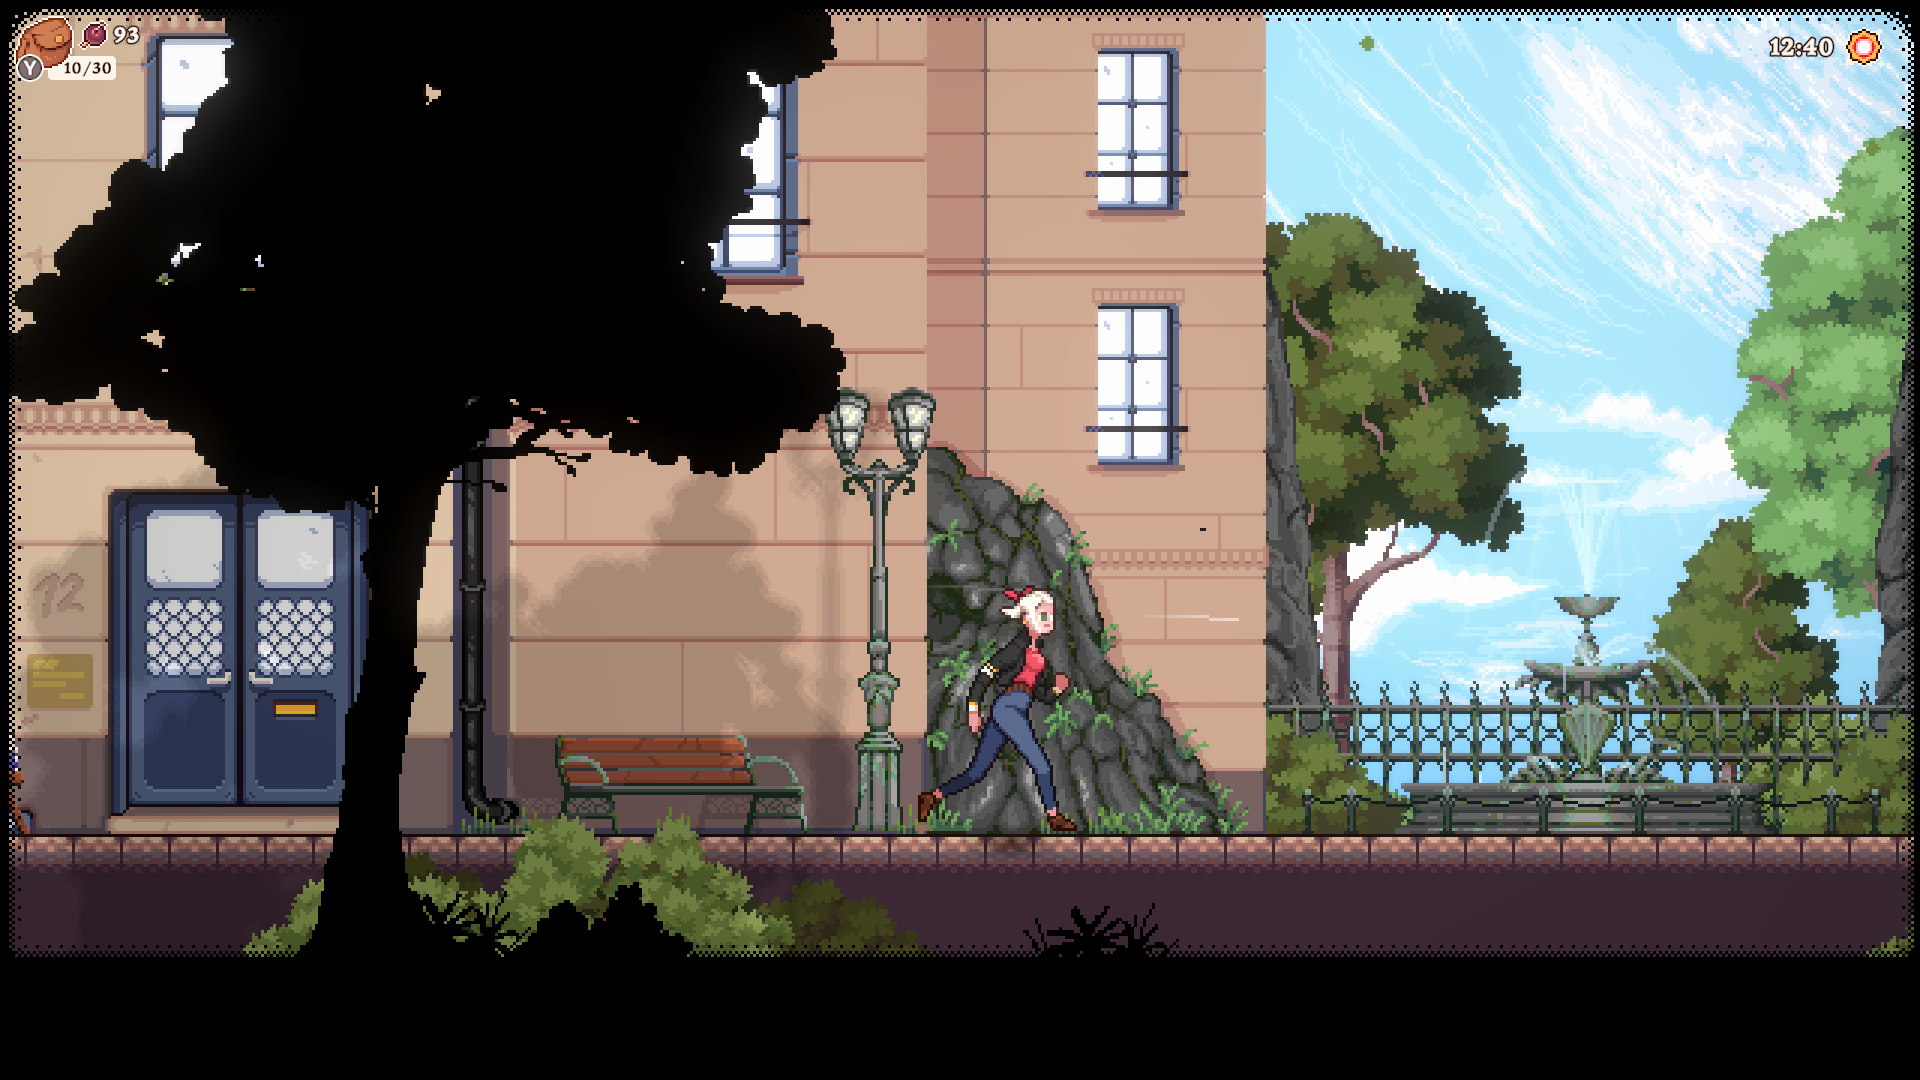 Gameplay Screenshot of Flora running through the town.